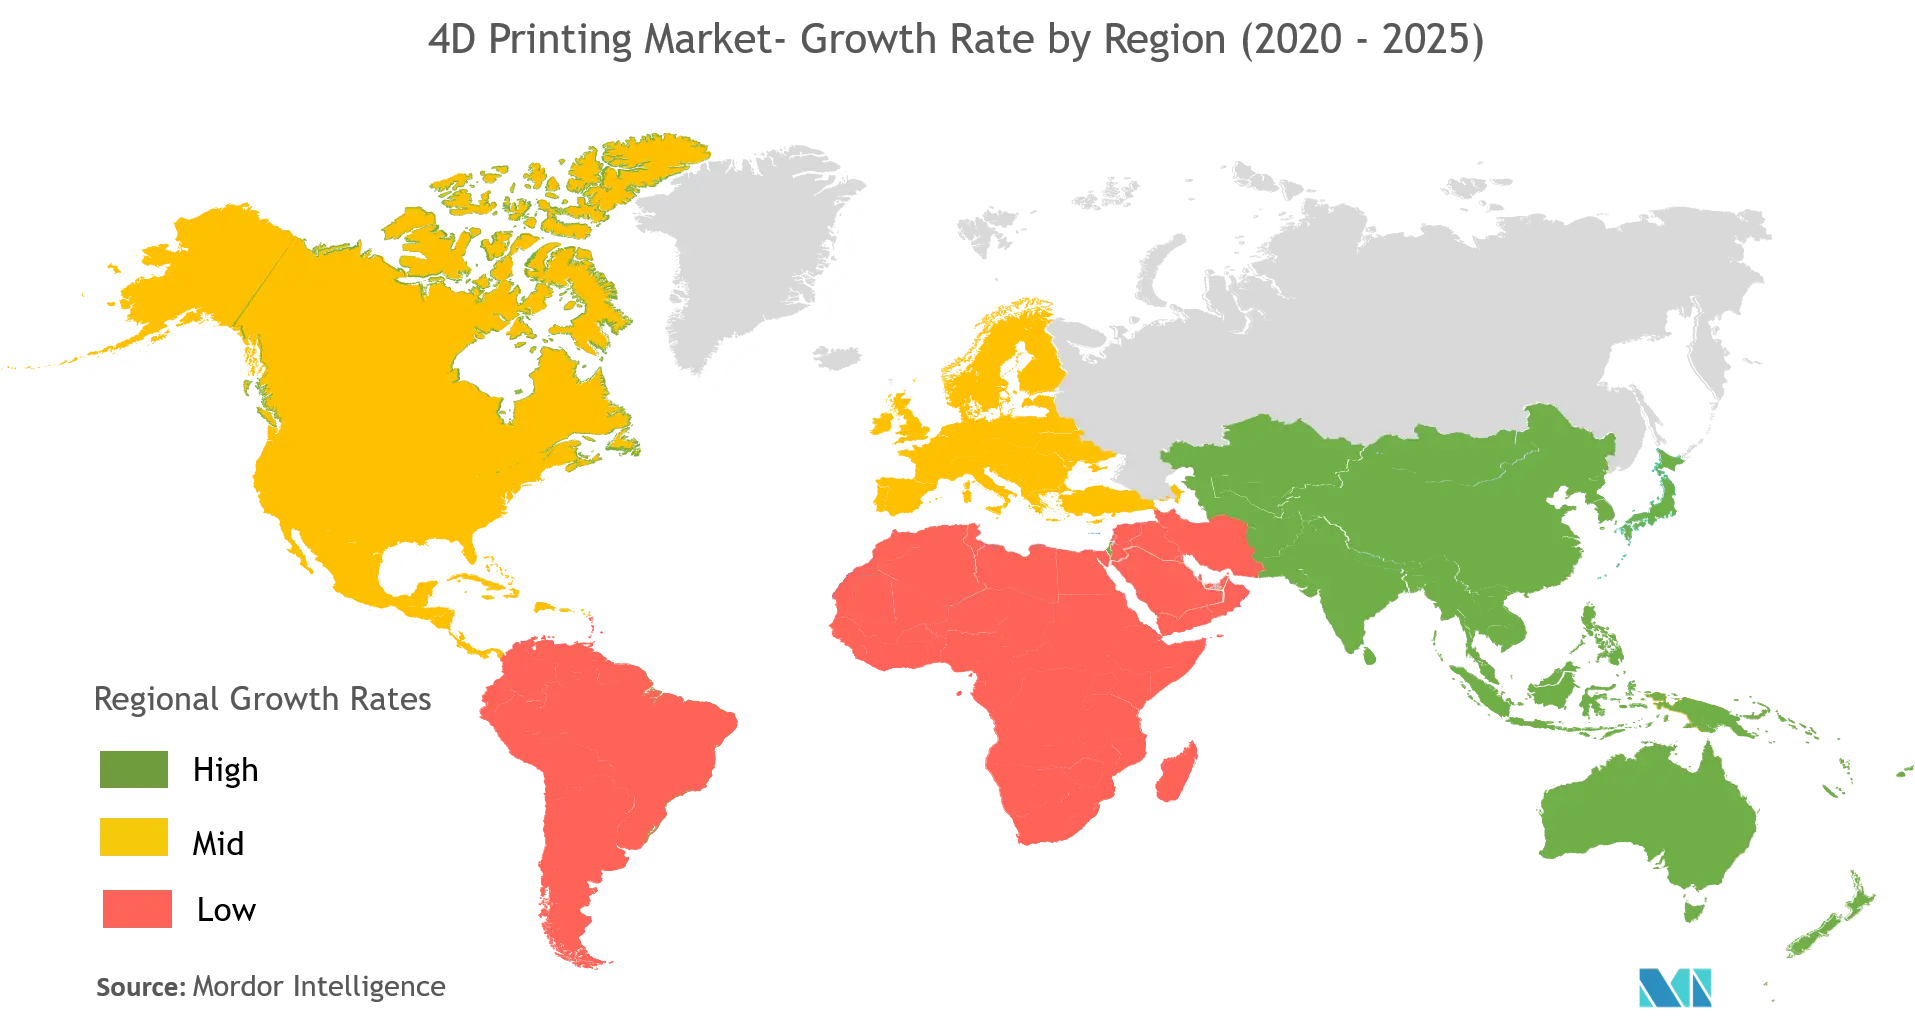 4D Printing Market Growth by Region